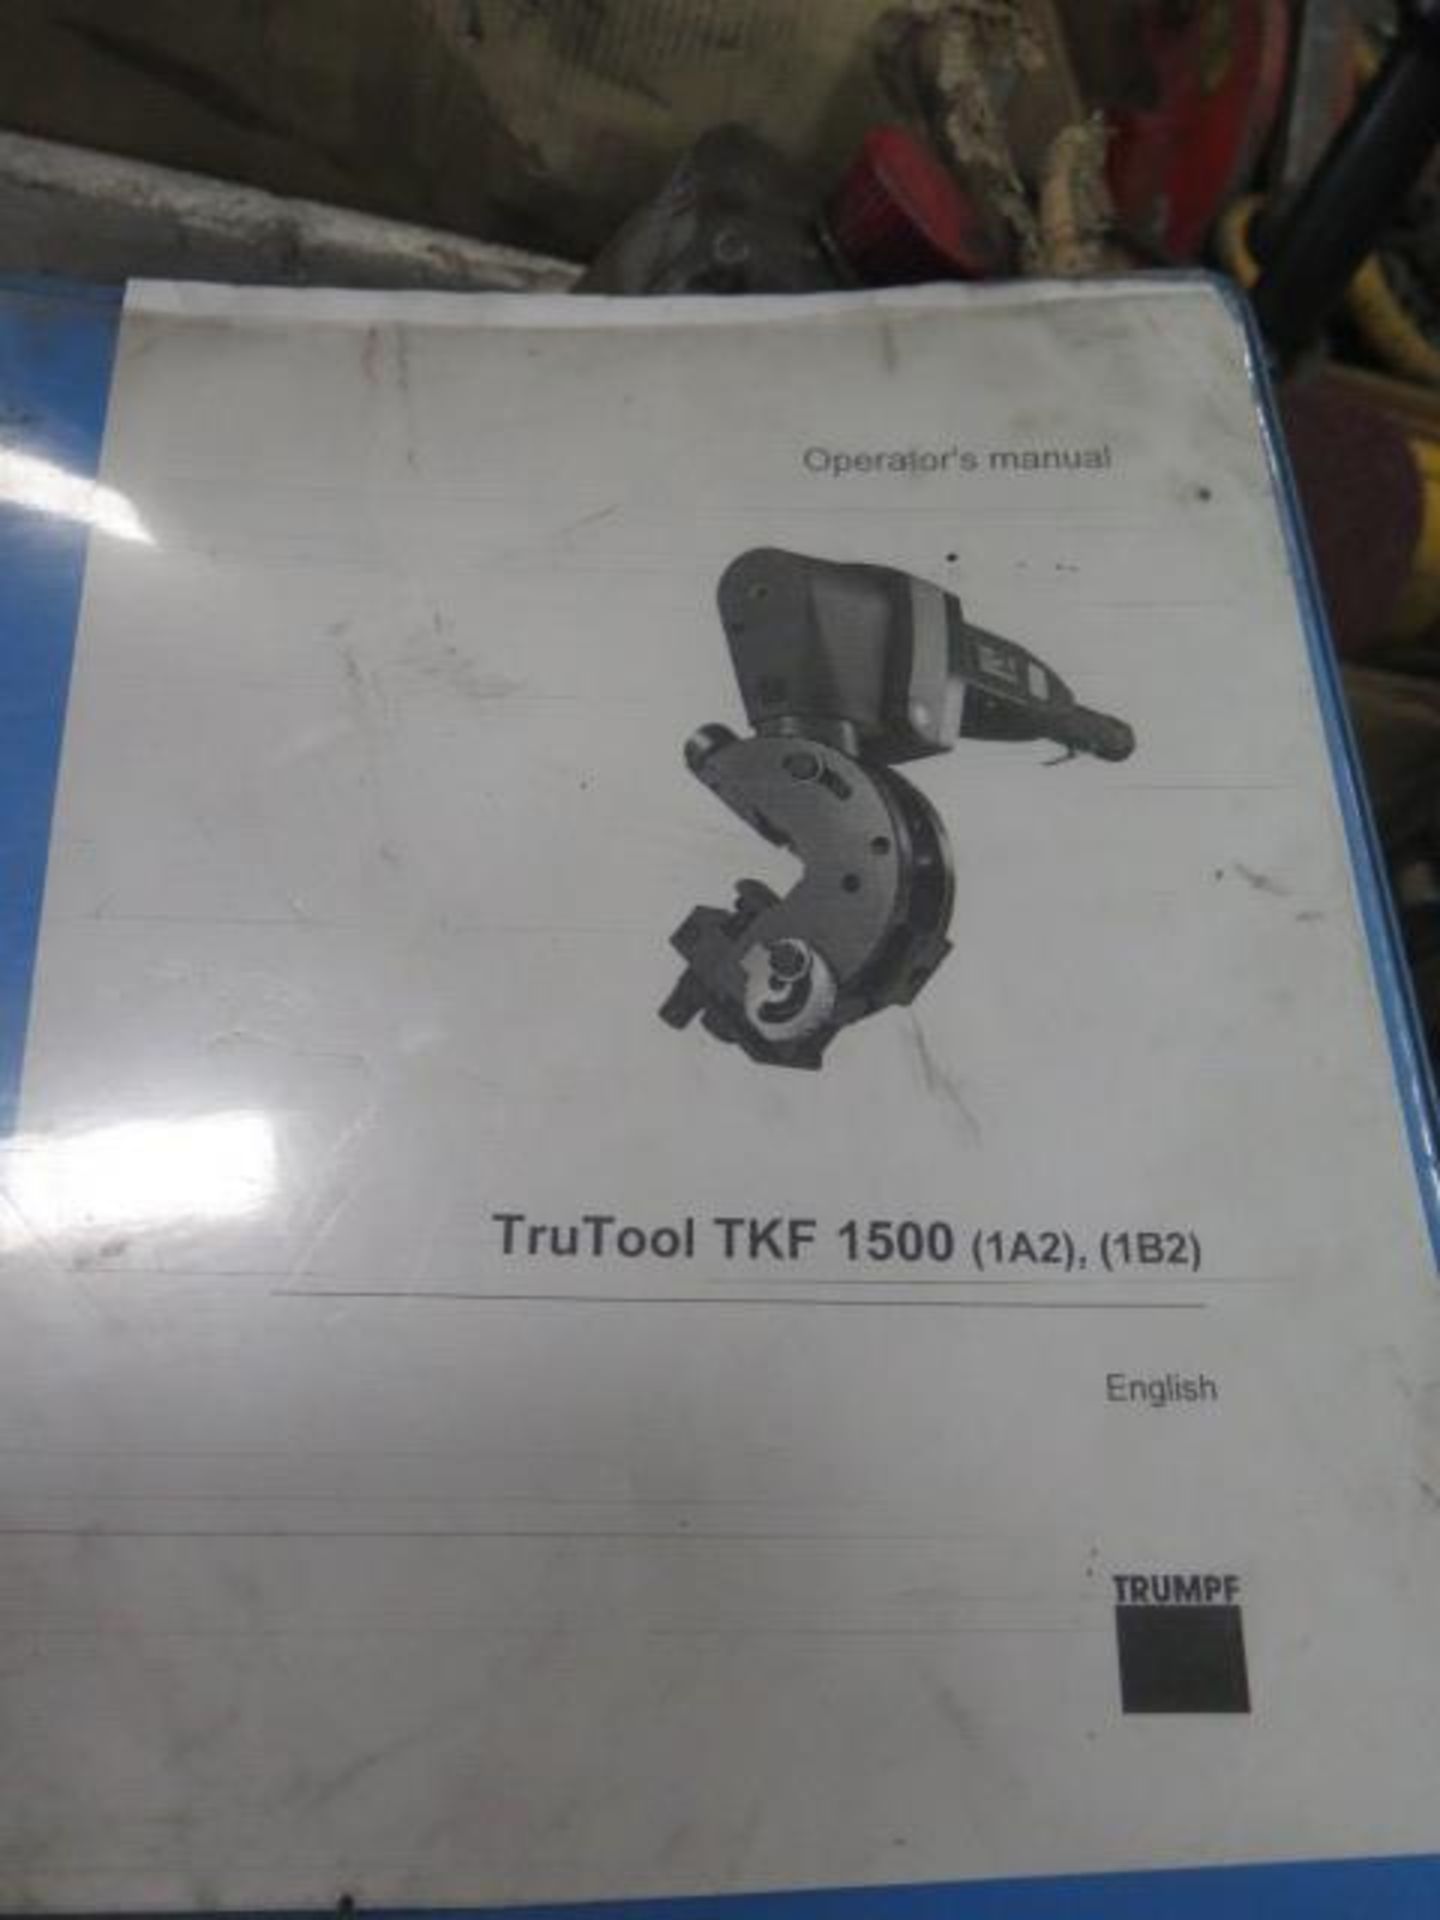 Trumpf "TruTool" TKF 1500 Power Beveler (SOLD AS-IS - NO WARRANTY) - Image 4 of 4